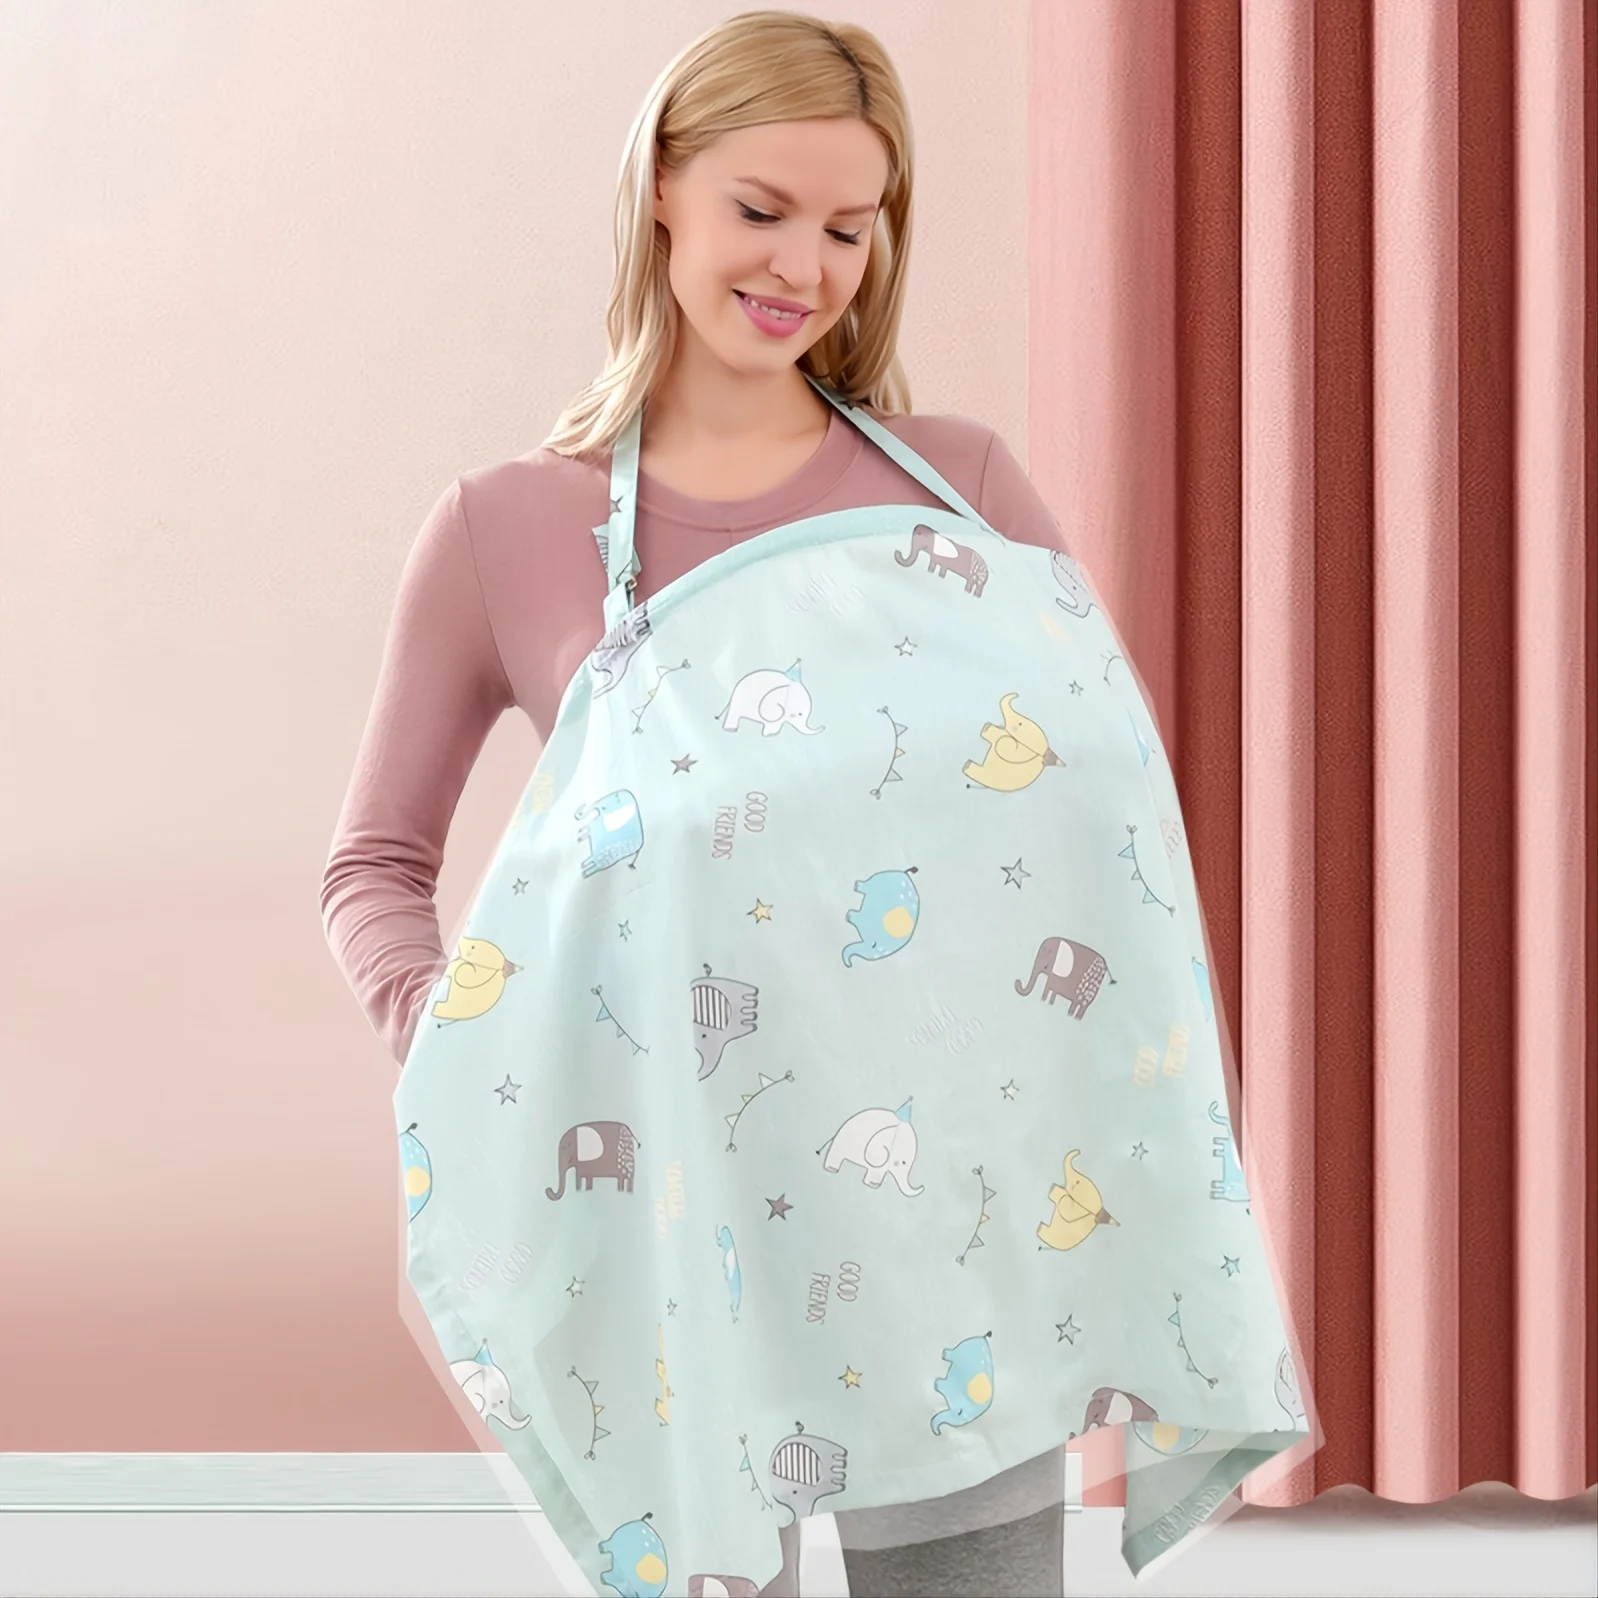 Mother Outing Breastfeeding Towel Soft Gauze Cotton Baby Feeding Nursing Covers Adjustable Anti-glare Nursing Cloth enlarge